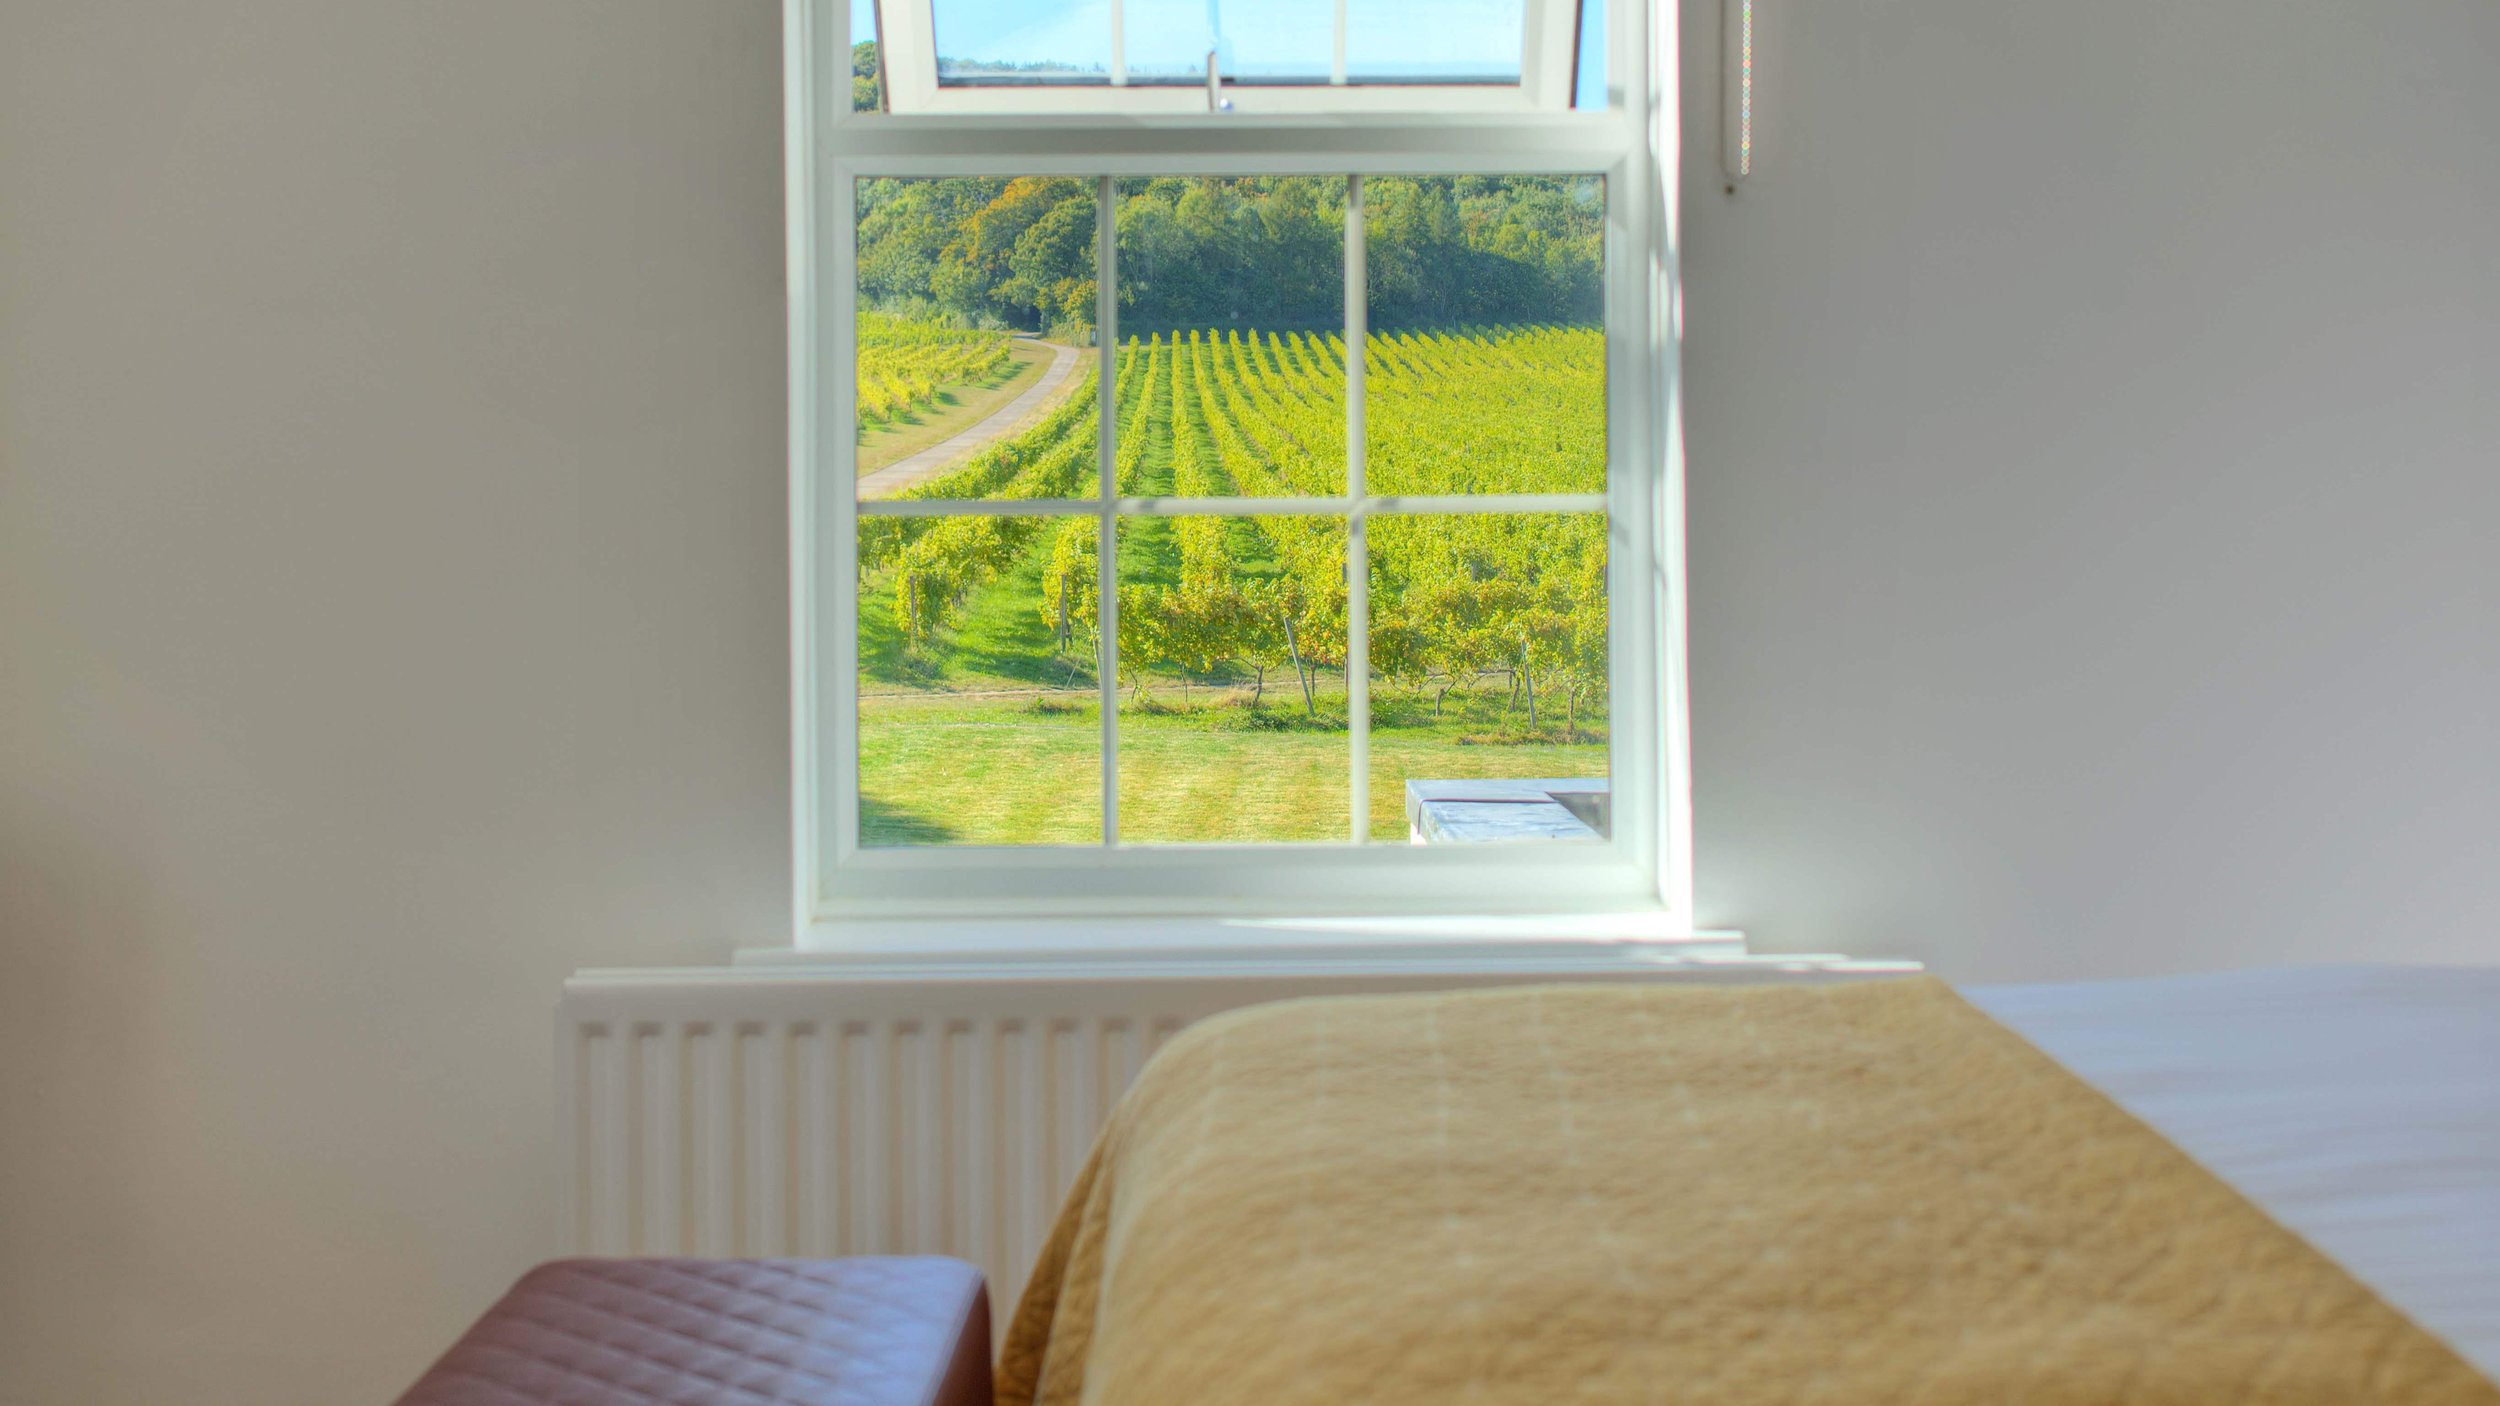 Vineyard view from a room at Denbies Wine Estate, Dorking, Surrey.jpg